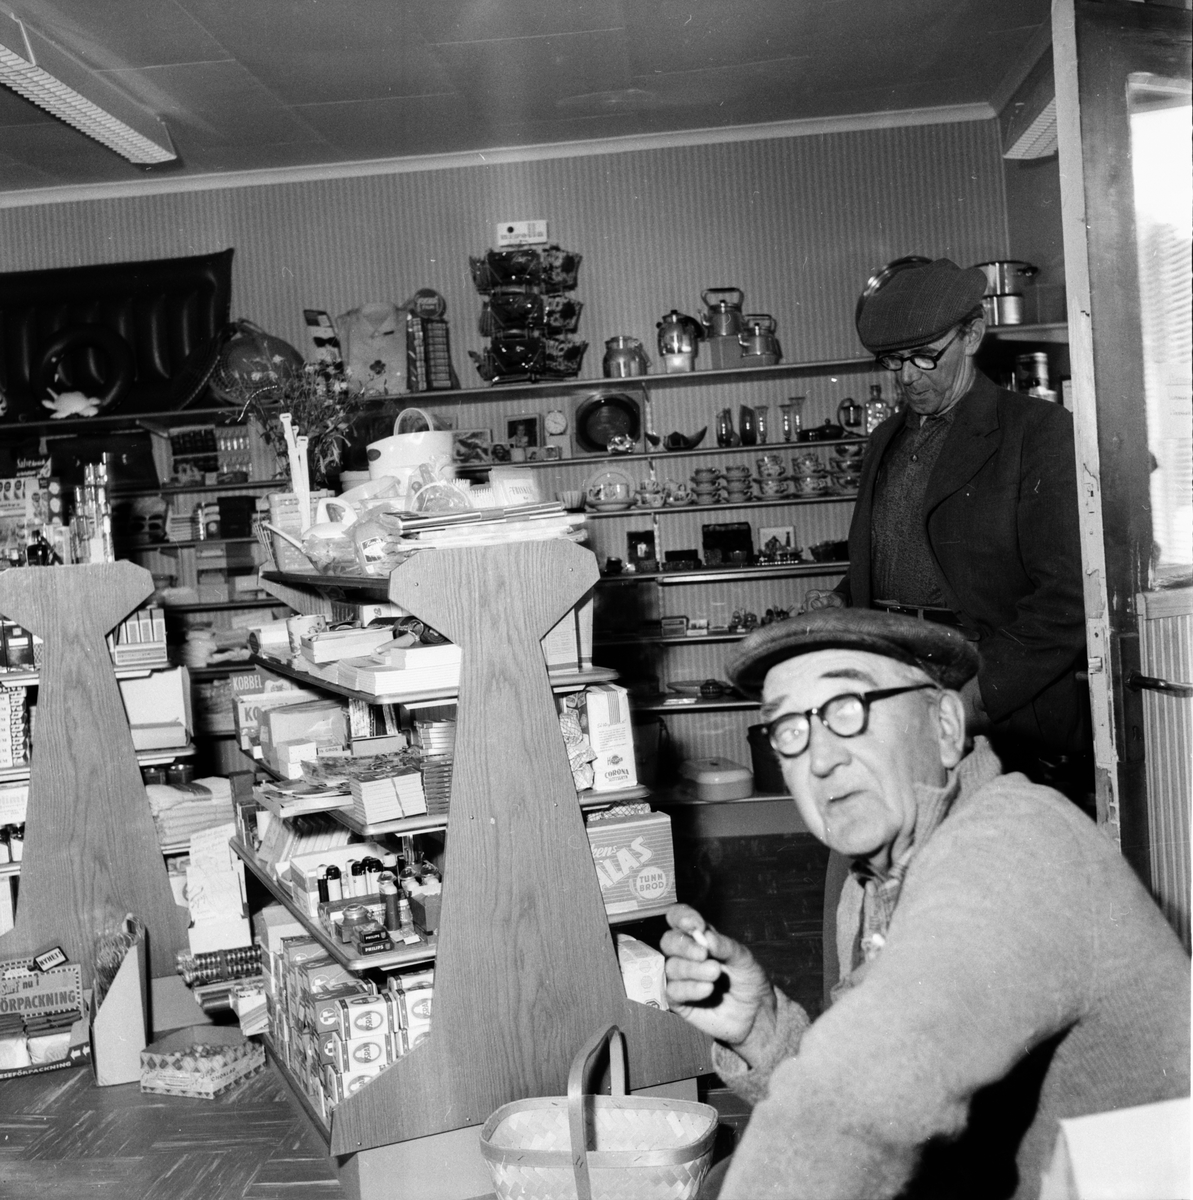 Hagbergs butik.
Skog, Stråtjära 10/7 1958